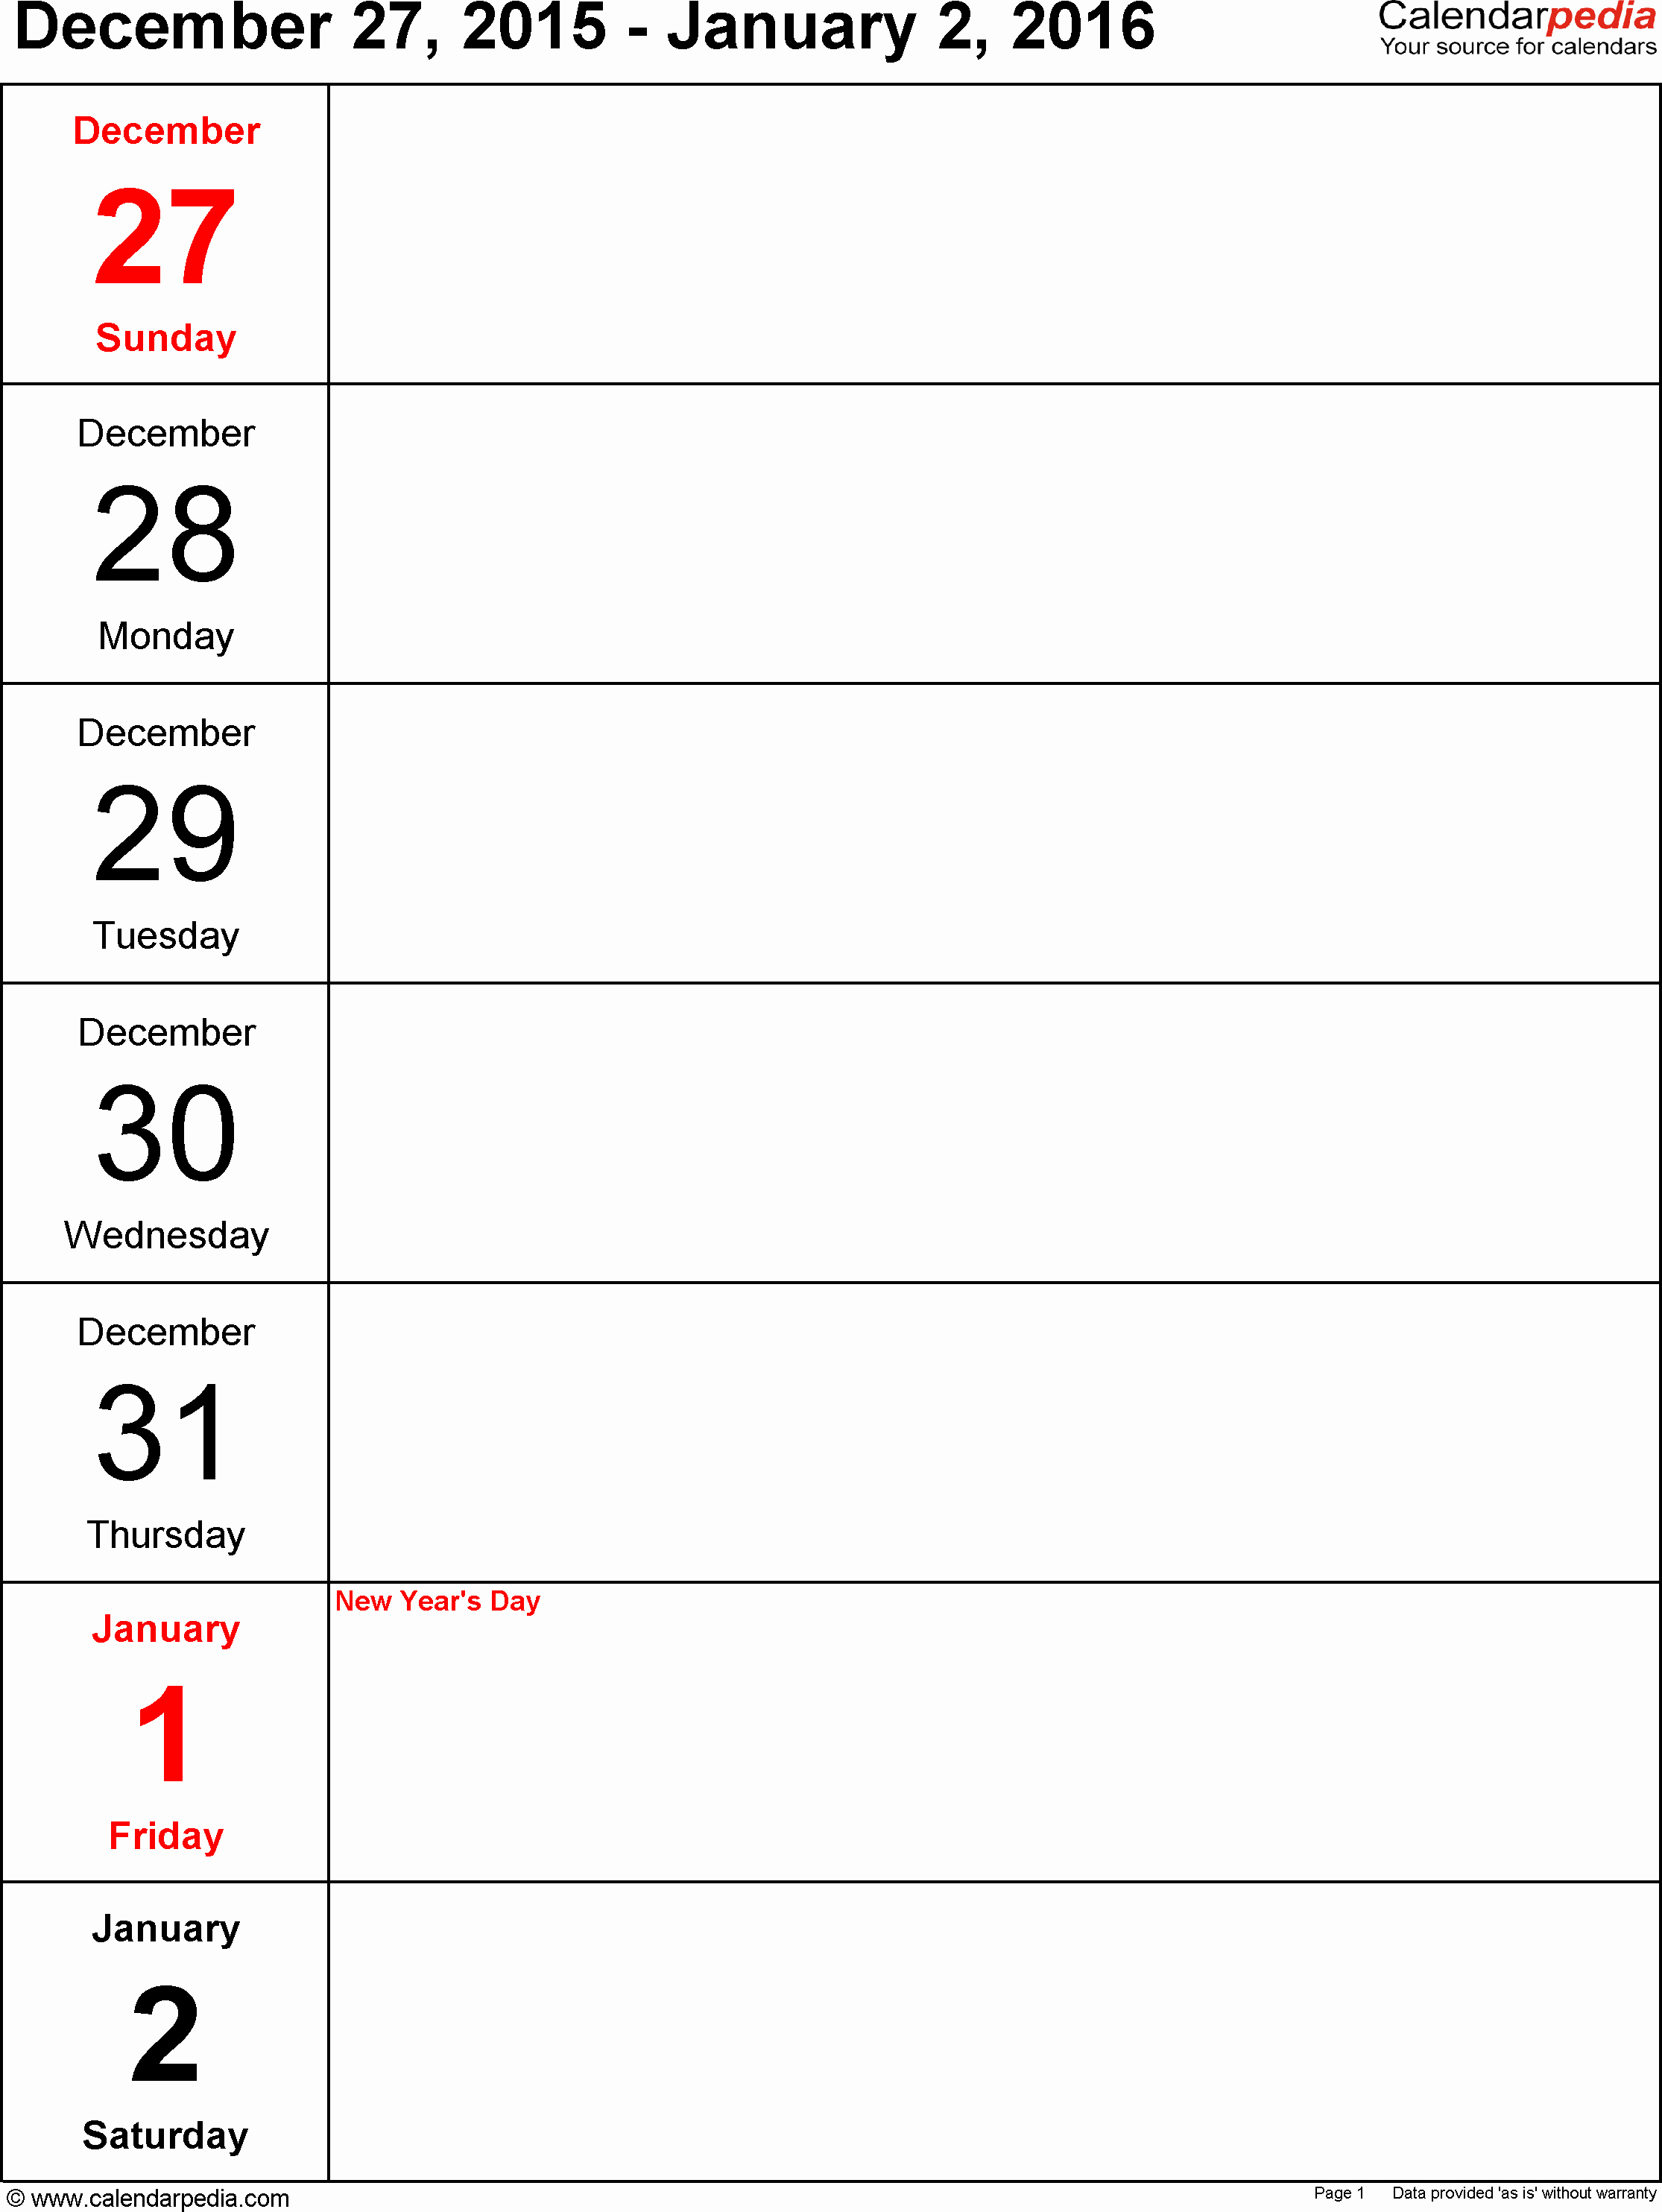 Free Printable Calendars 2016 Templates Inspirational Weekly Calendar 2016 for Pdf 5 Free Printable Templates